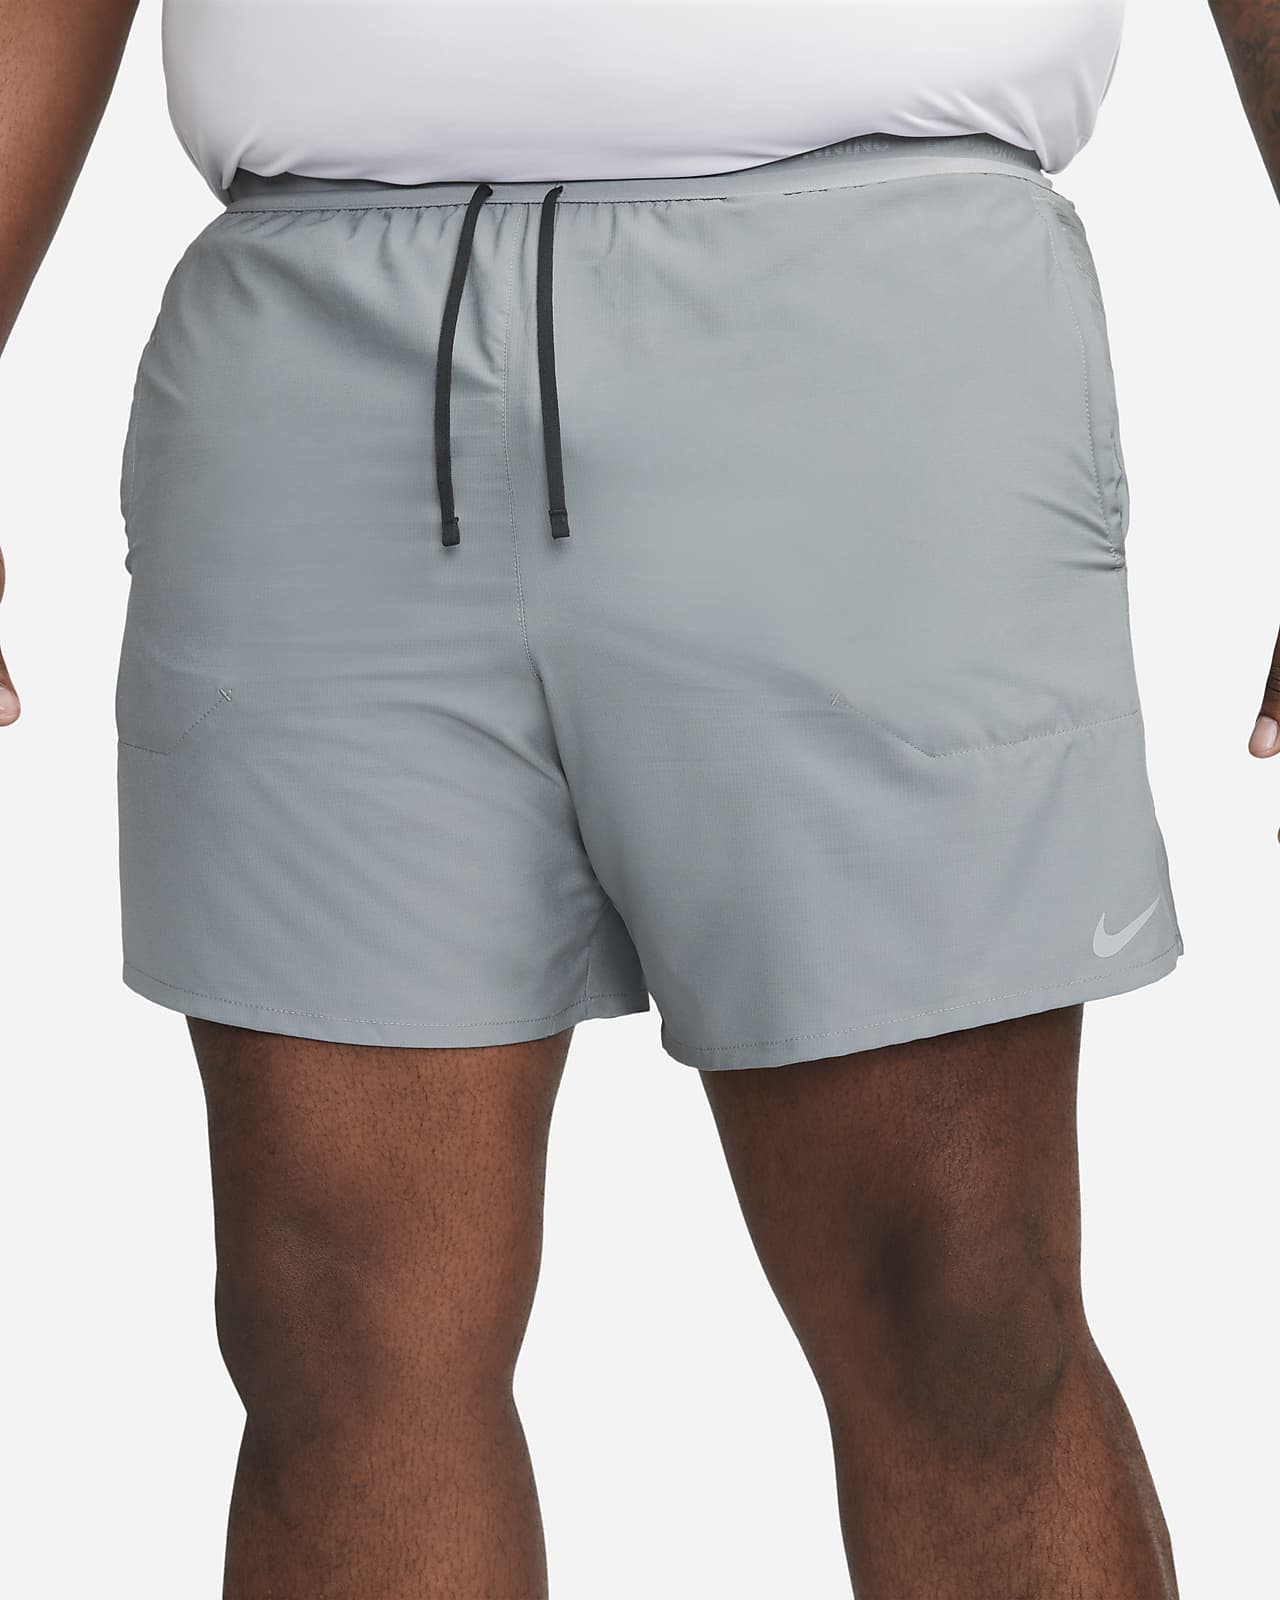 nike men's shorts 7 inch inseam